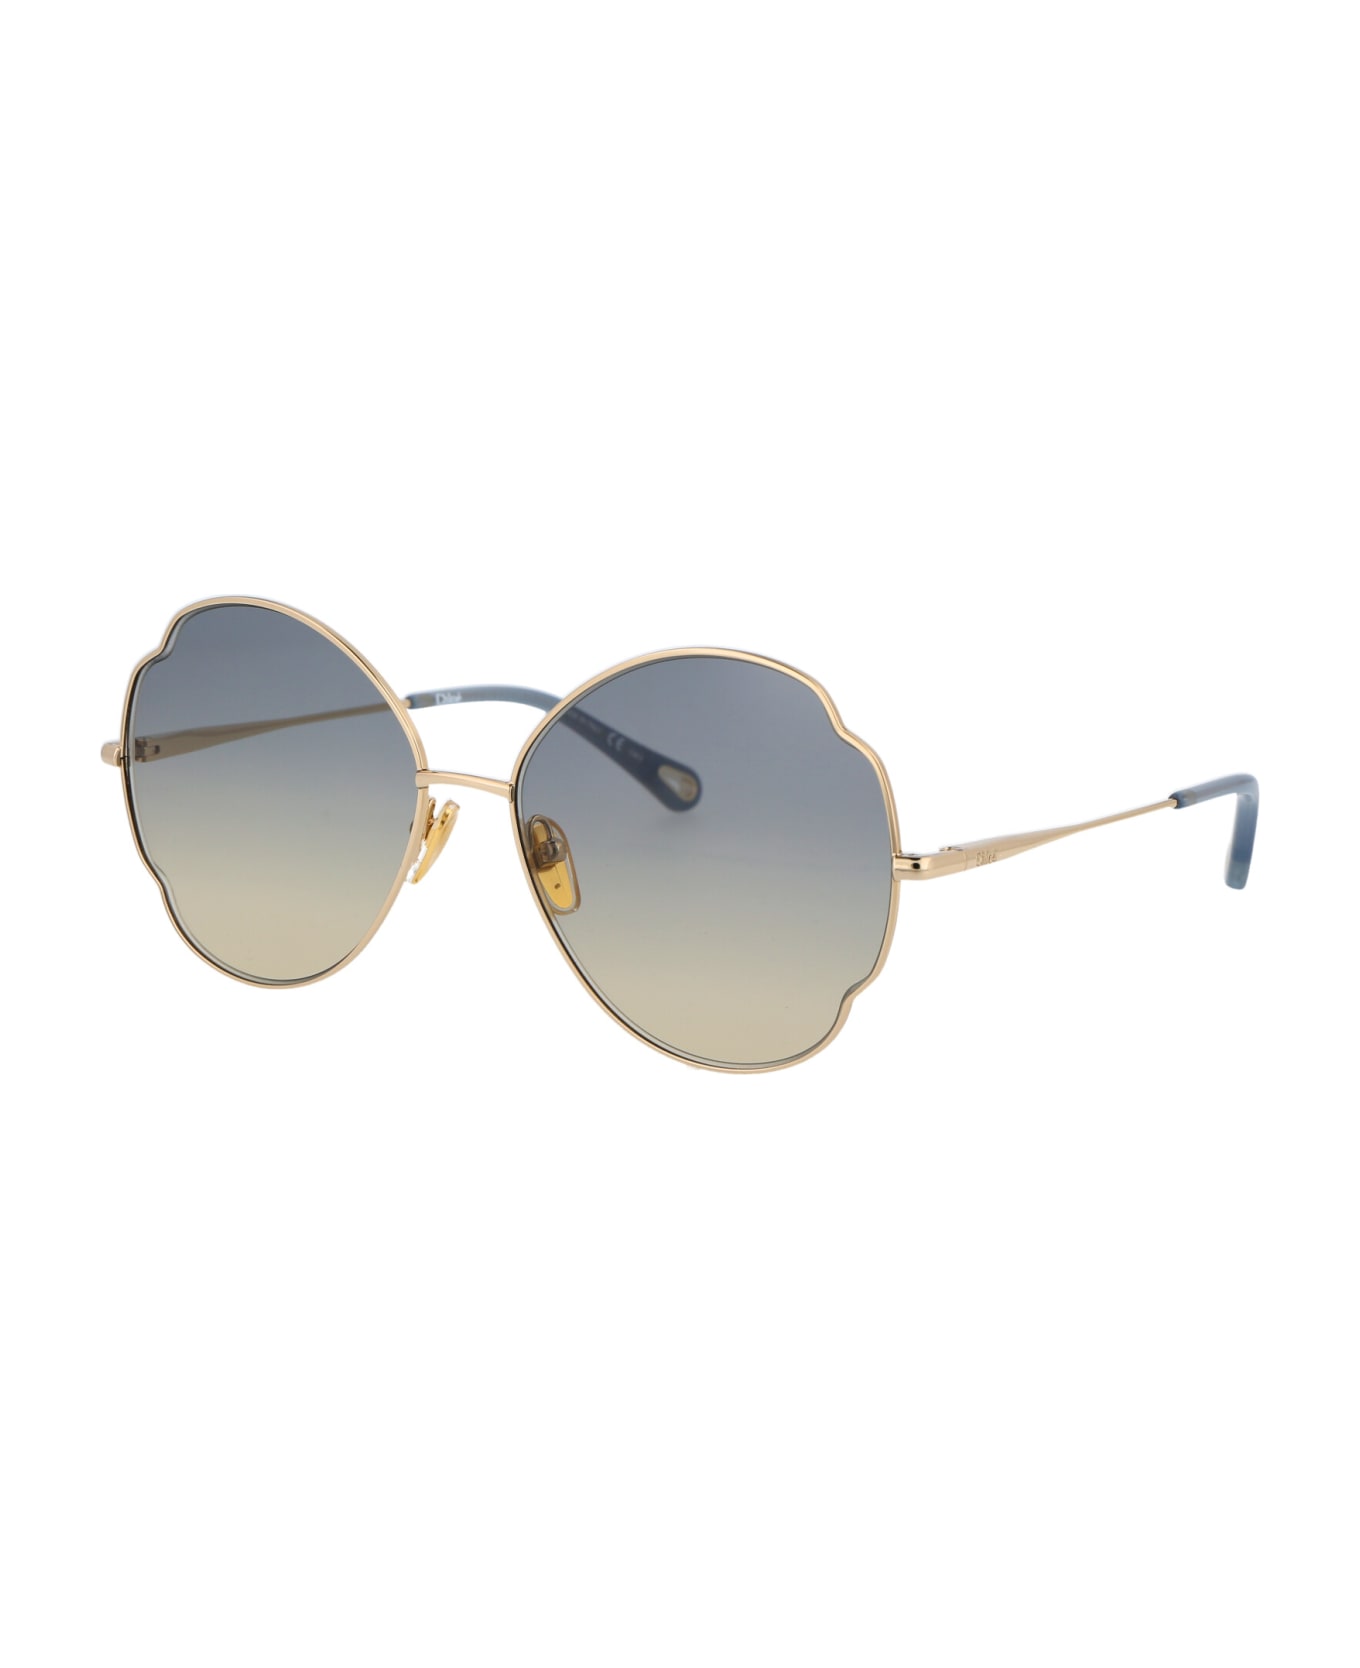 Chloé Eyewear Ch0093s Sunglasses - 002 GOLD GOLD GREY サングラス